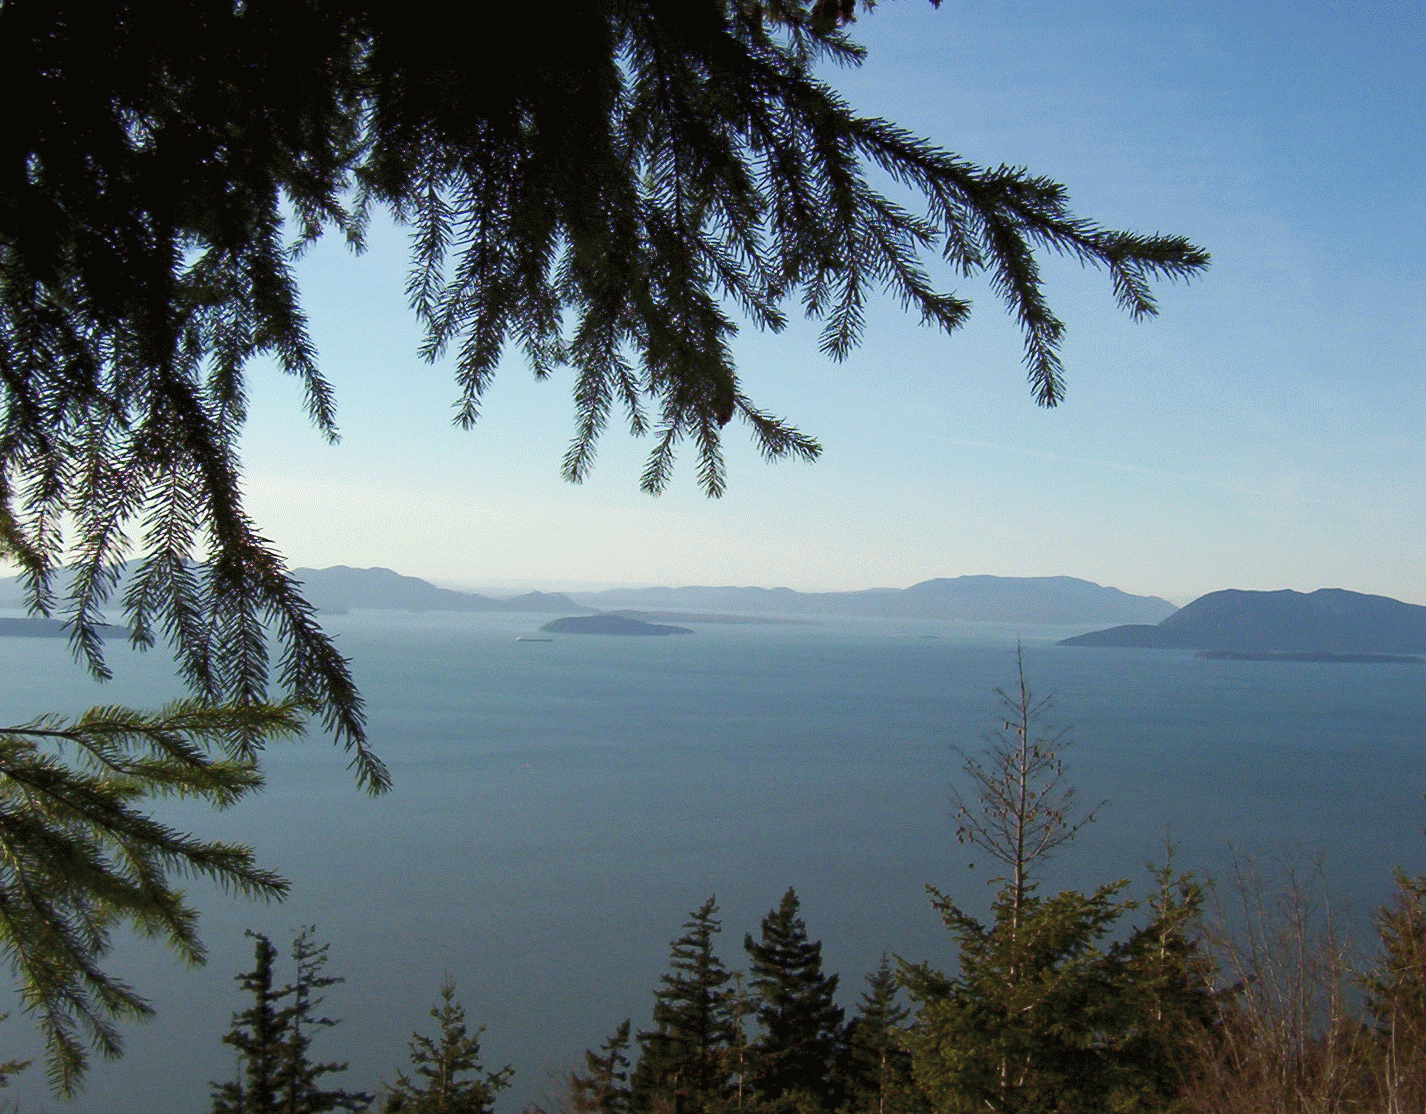 View from chuckanut mountain